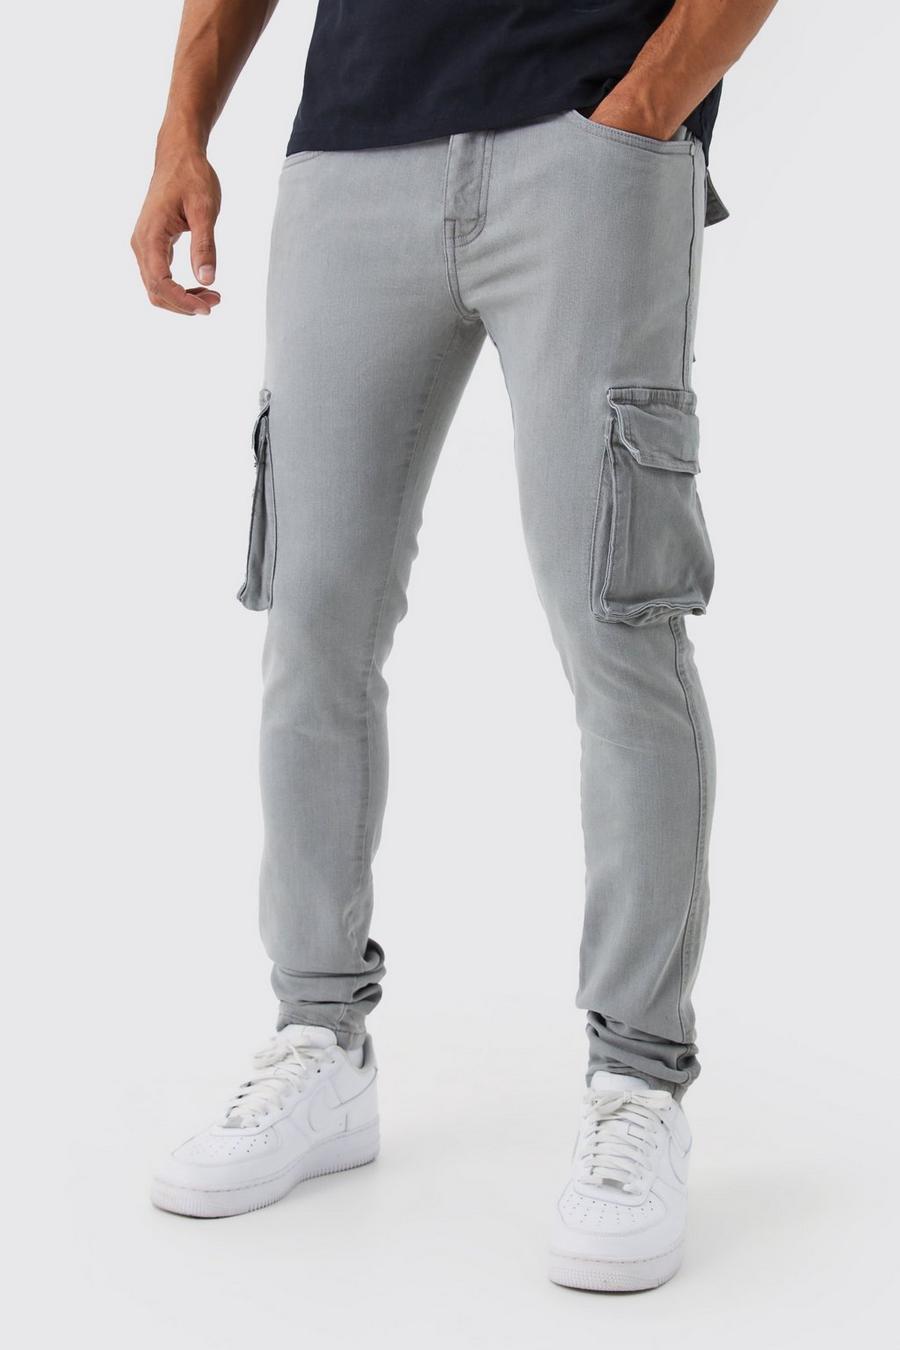 Jeans Cargo Skinny Fit Stretch stile Carpenter, Mid grey